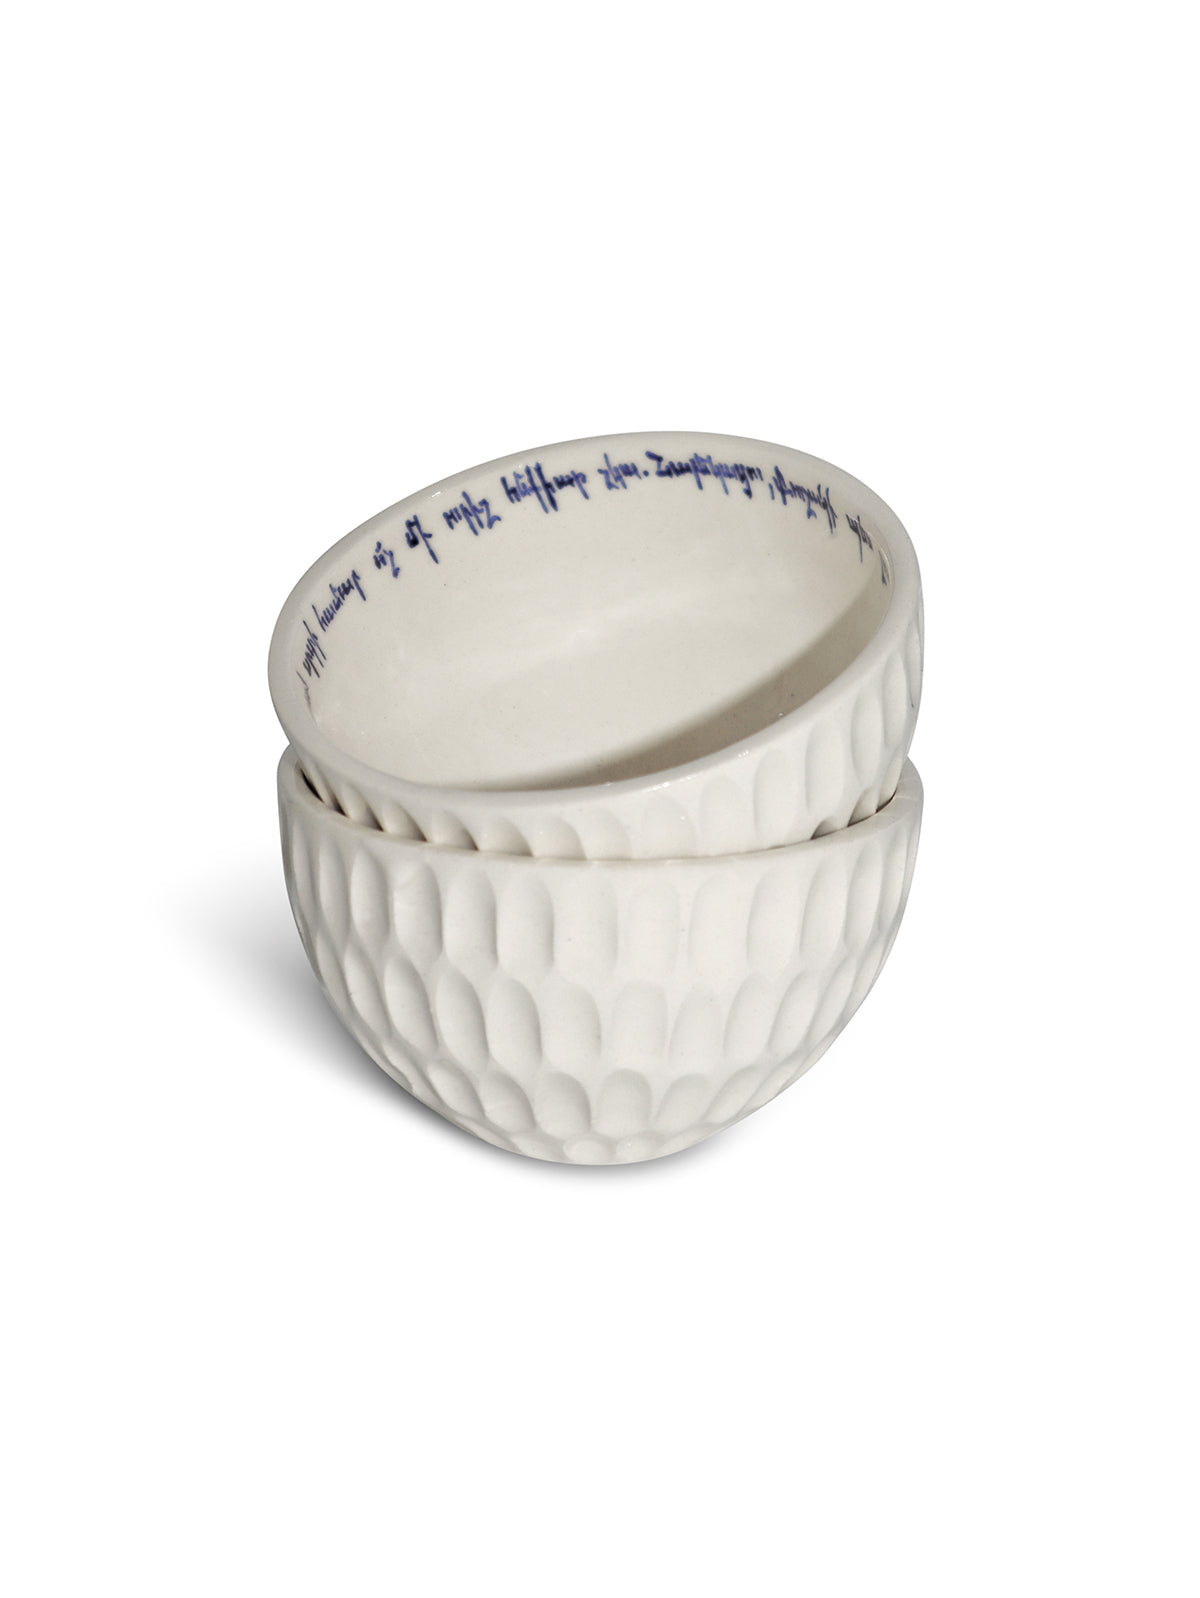 Ceramic Bowl Set with Armenian Rhymes